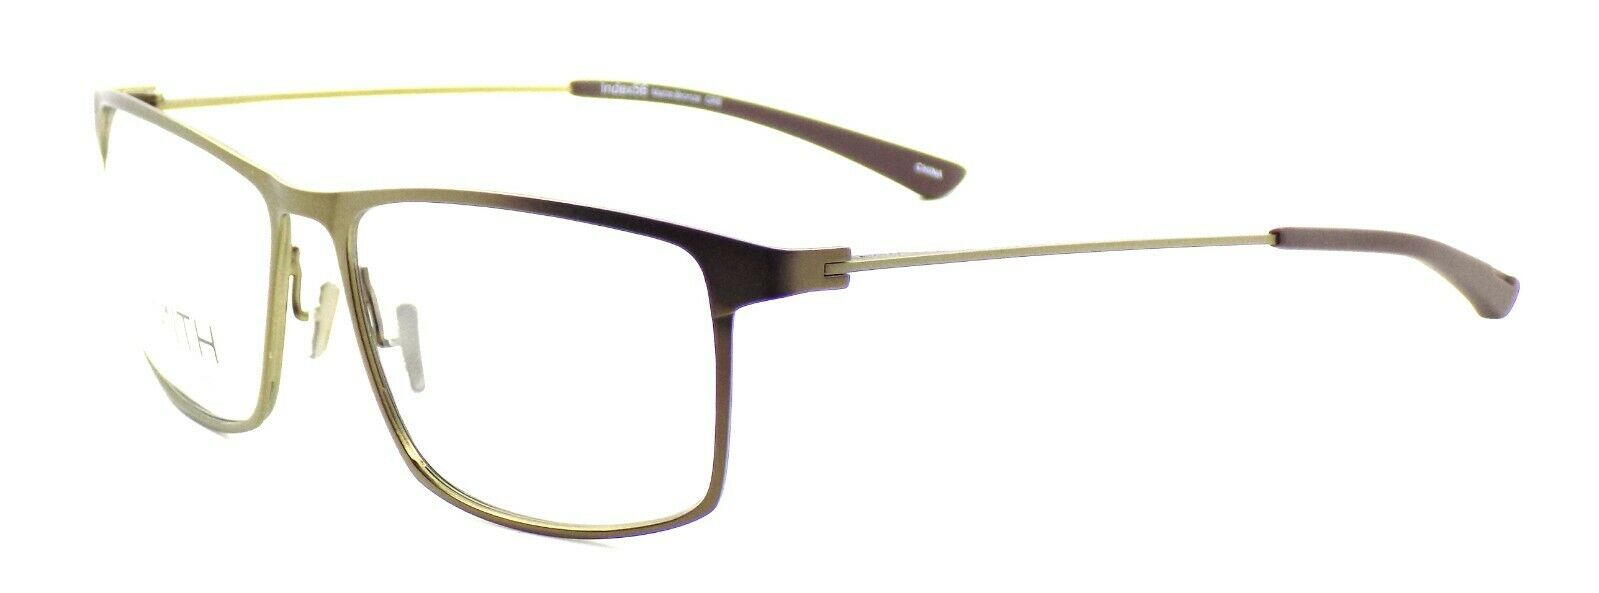 1-SMITH Optics Index56 GR8 Men's Eyeglasses Frames 56-15-140 Matte Bronze + CASE-762753296658-IKSpecs